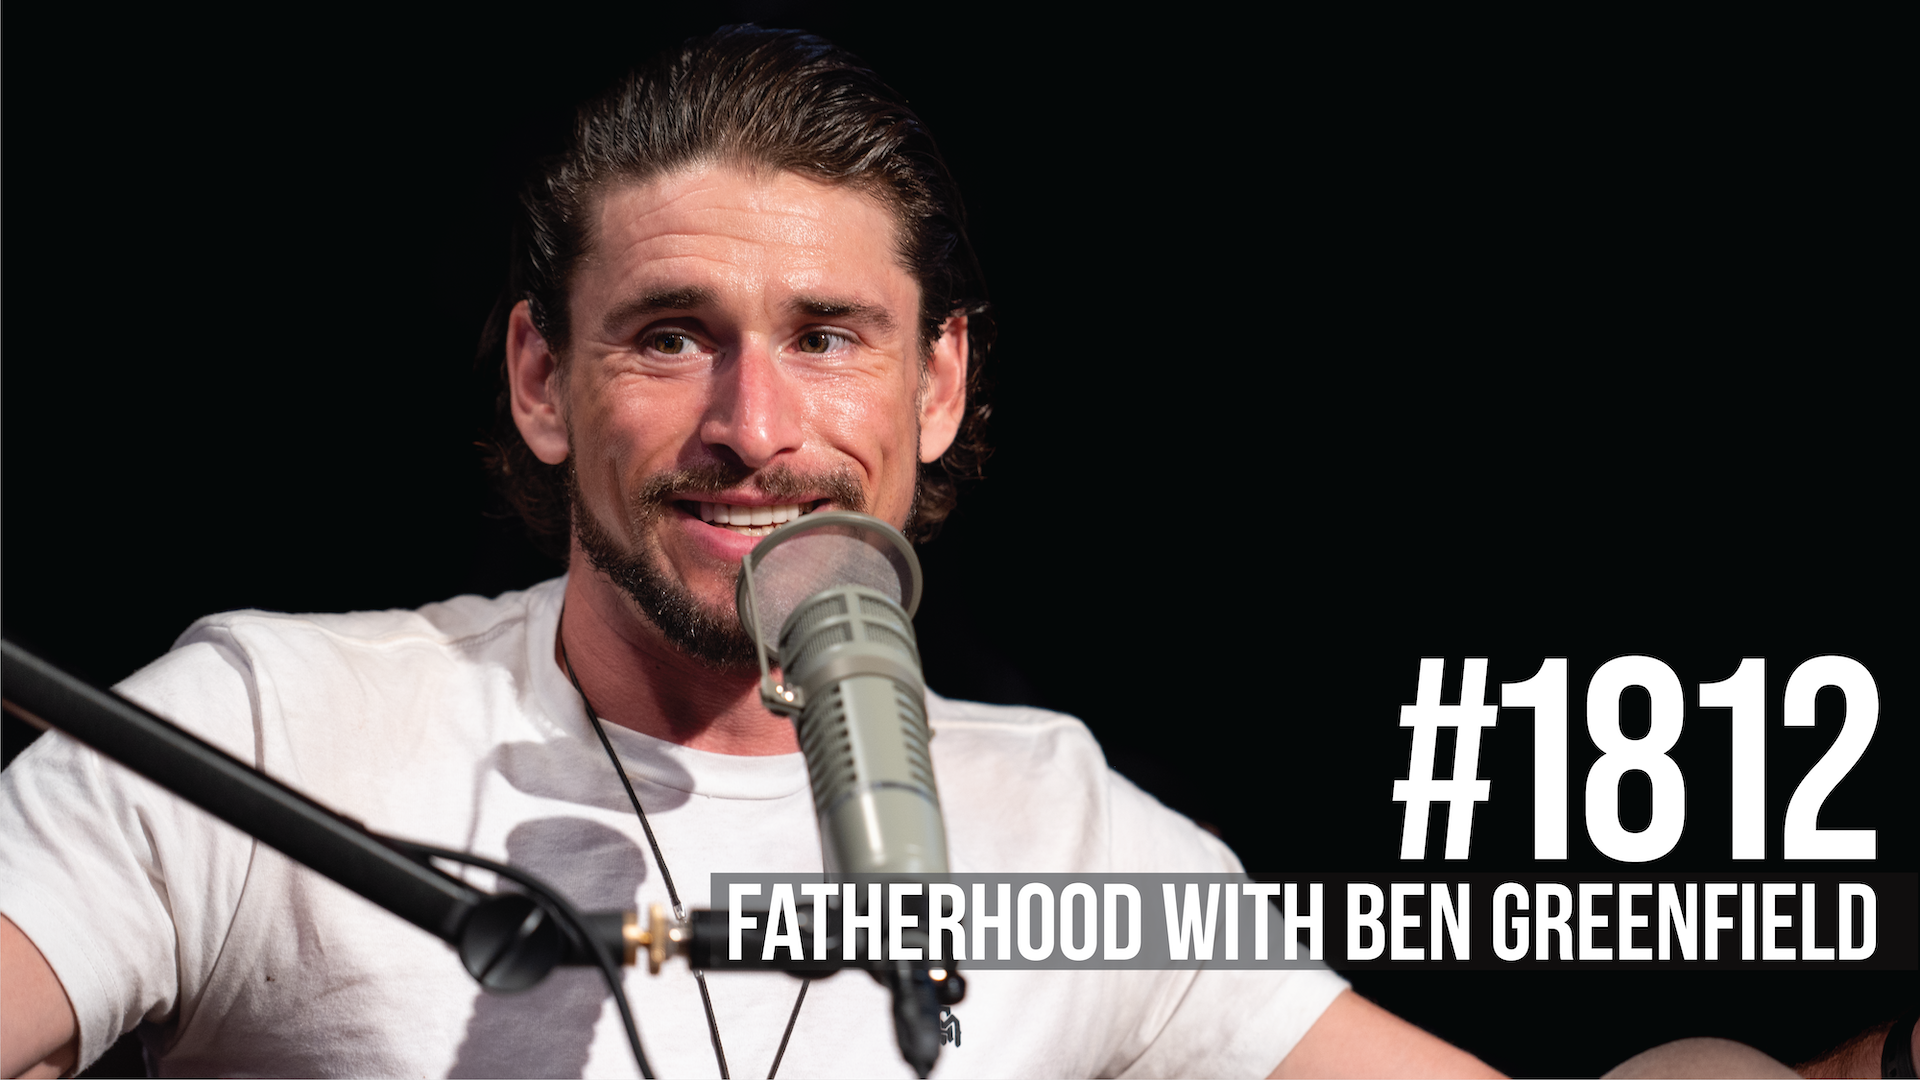 1812: Fatherhood With Ben Greenfield